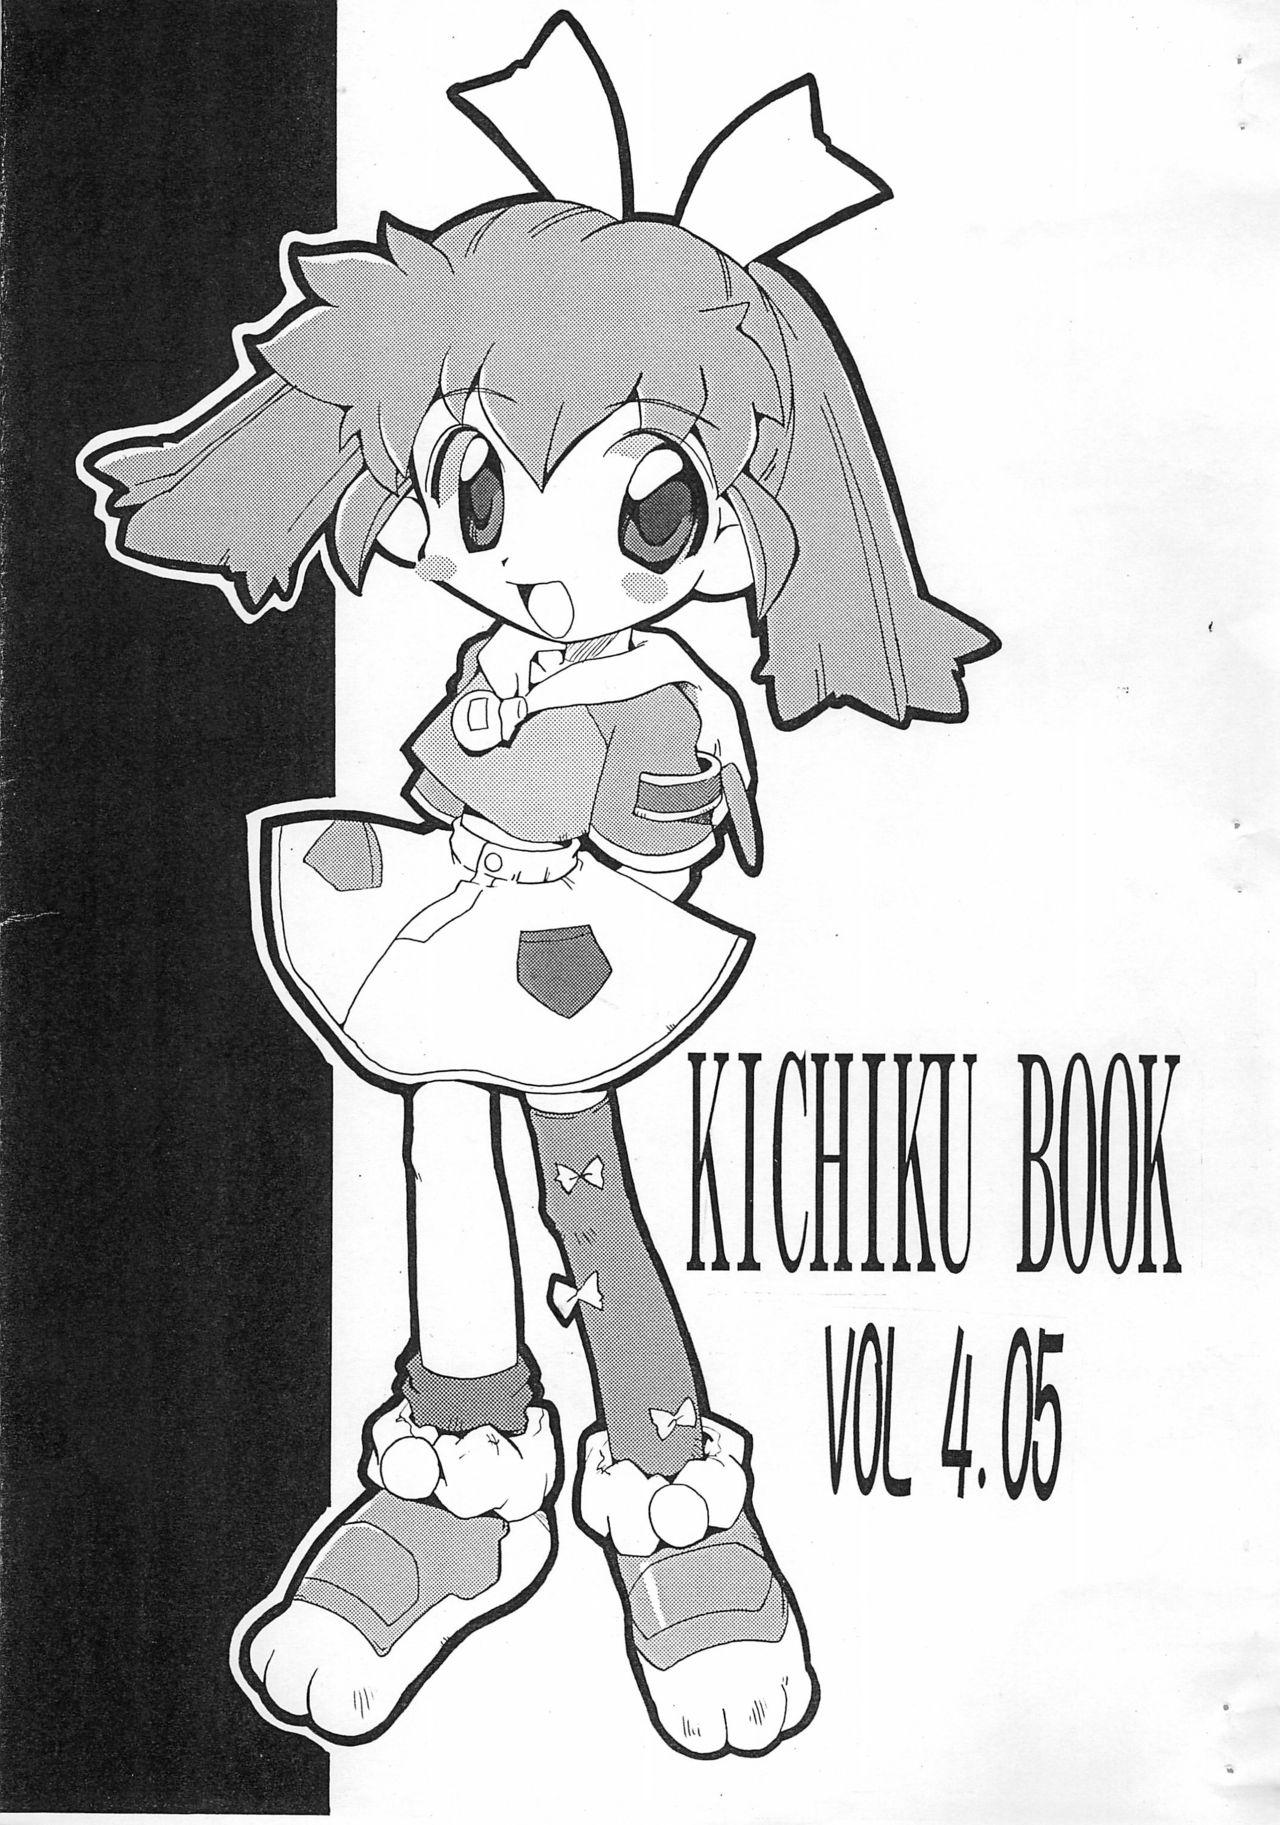 KICHIKU BOOK VOL4.05 1